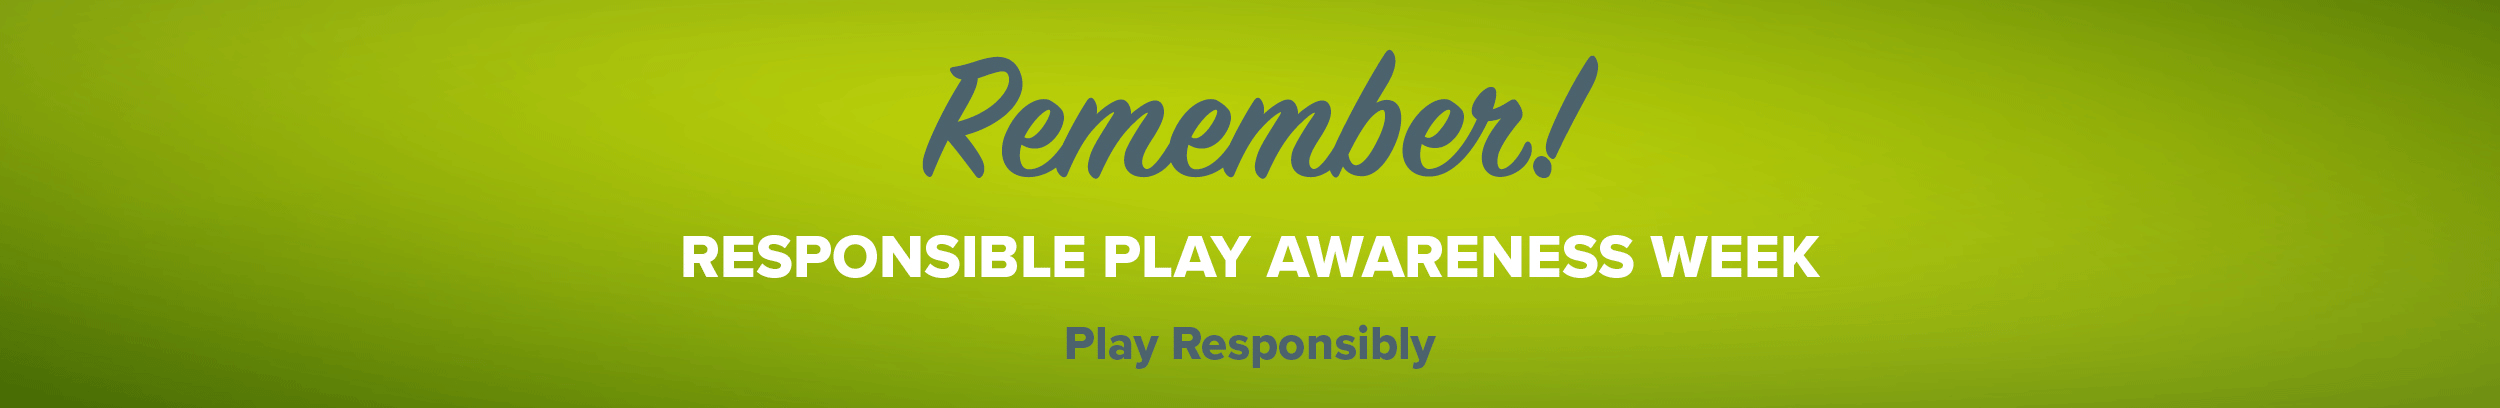 Responsible Play Awareness Week Banner